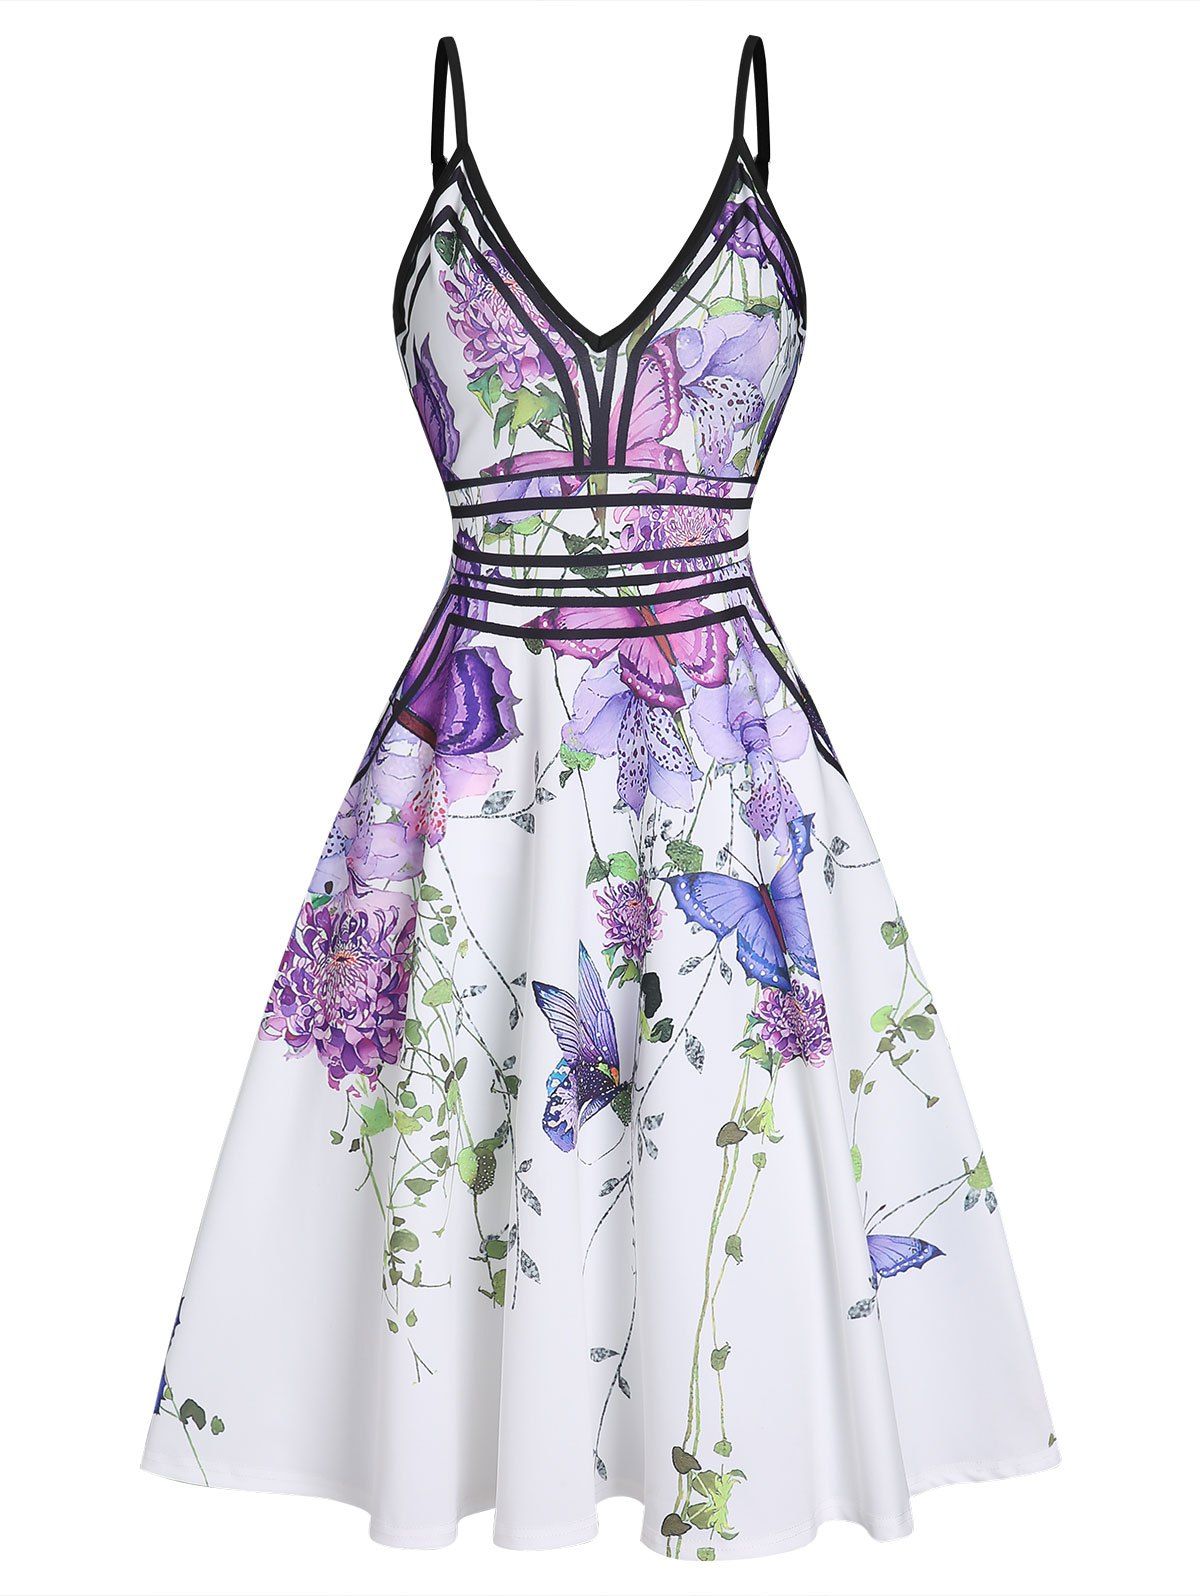 Vacation A Line Sundress Butterfly Flower Print Garden Party Dress Plunge Contrast Piping Summer Dress - LIGHT PURPLE M